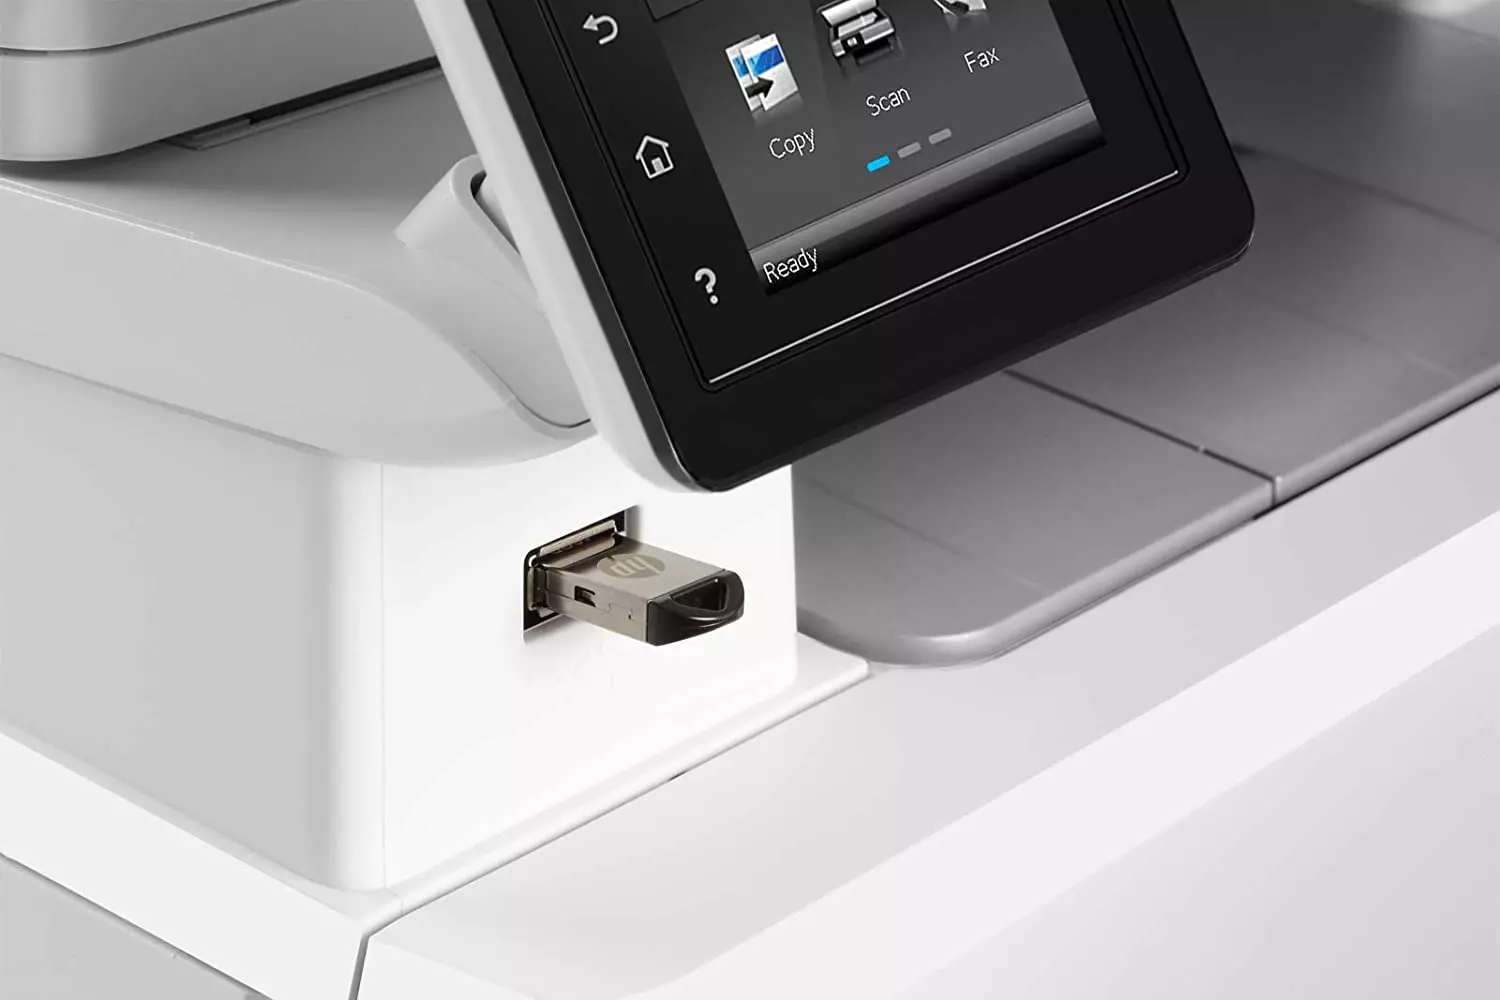 HP LaserJet Pro MFP M477fdn Multifunction Color Laser Printer